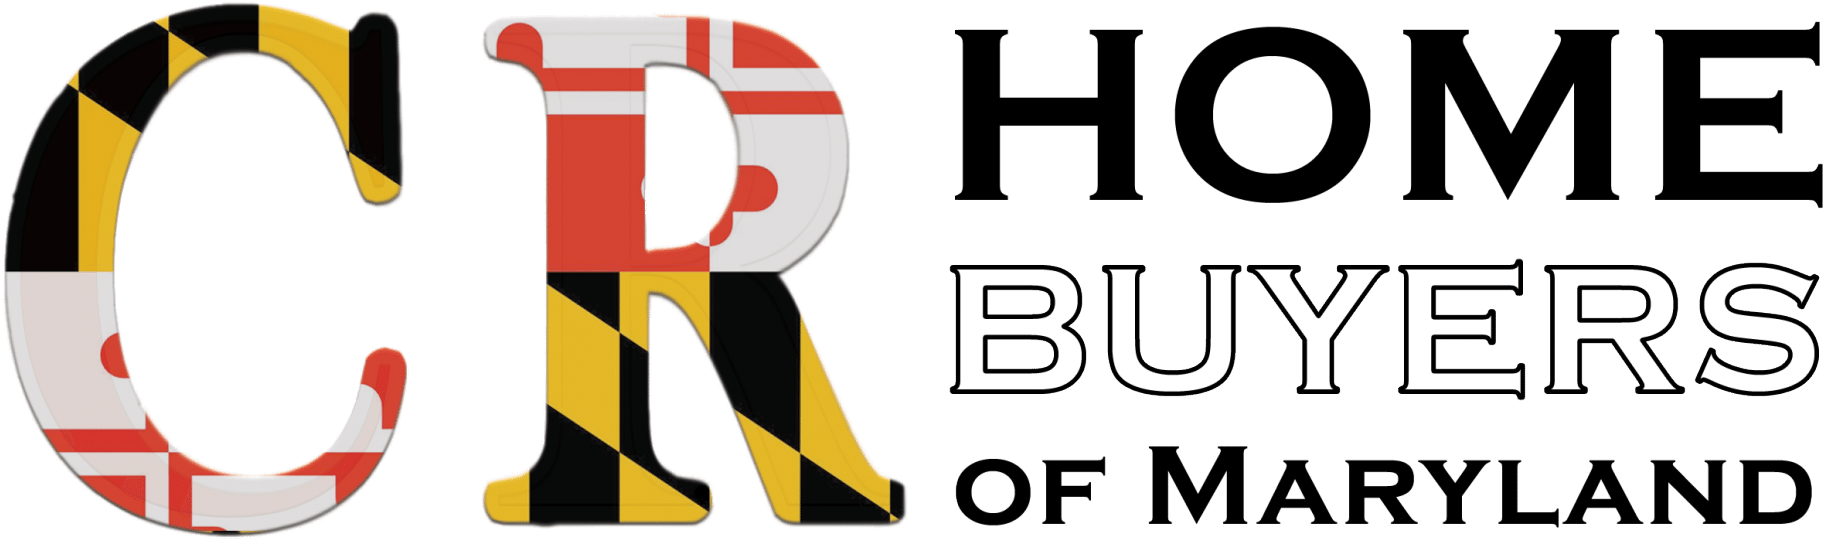 Cr Of Maryland Llc Logo - Baltimore Orioles (1920x583)